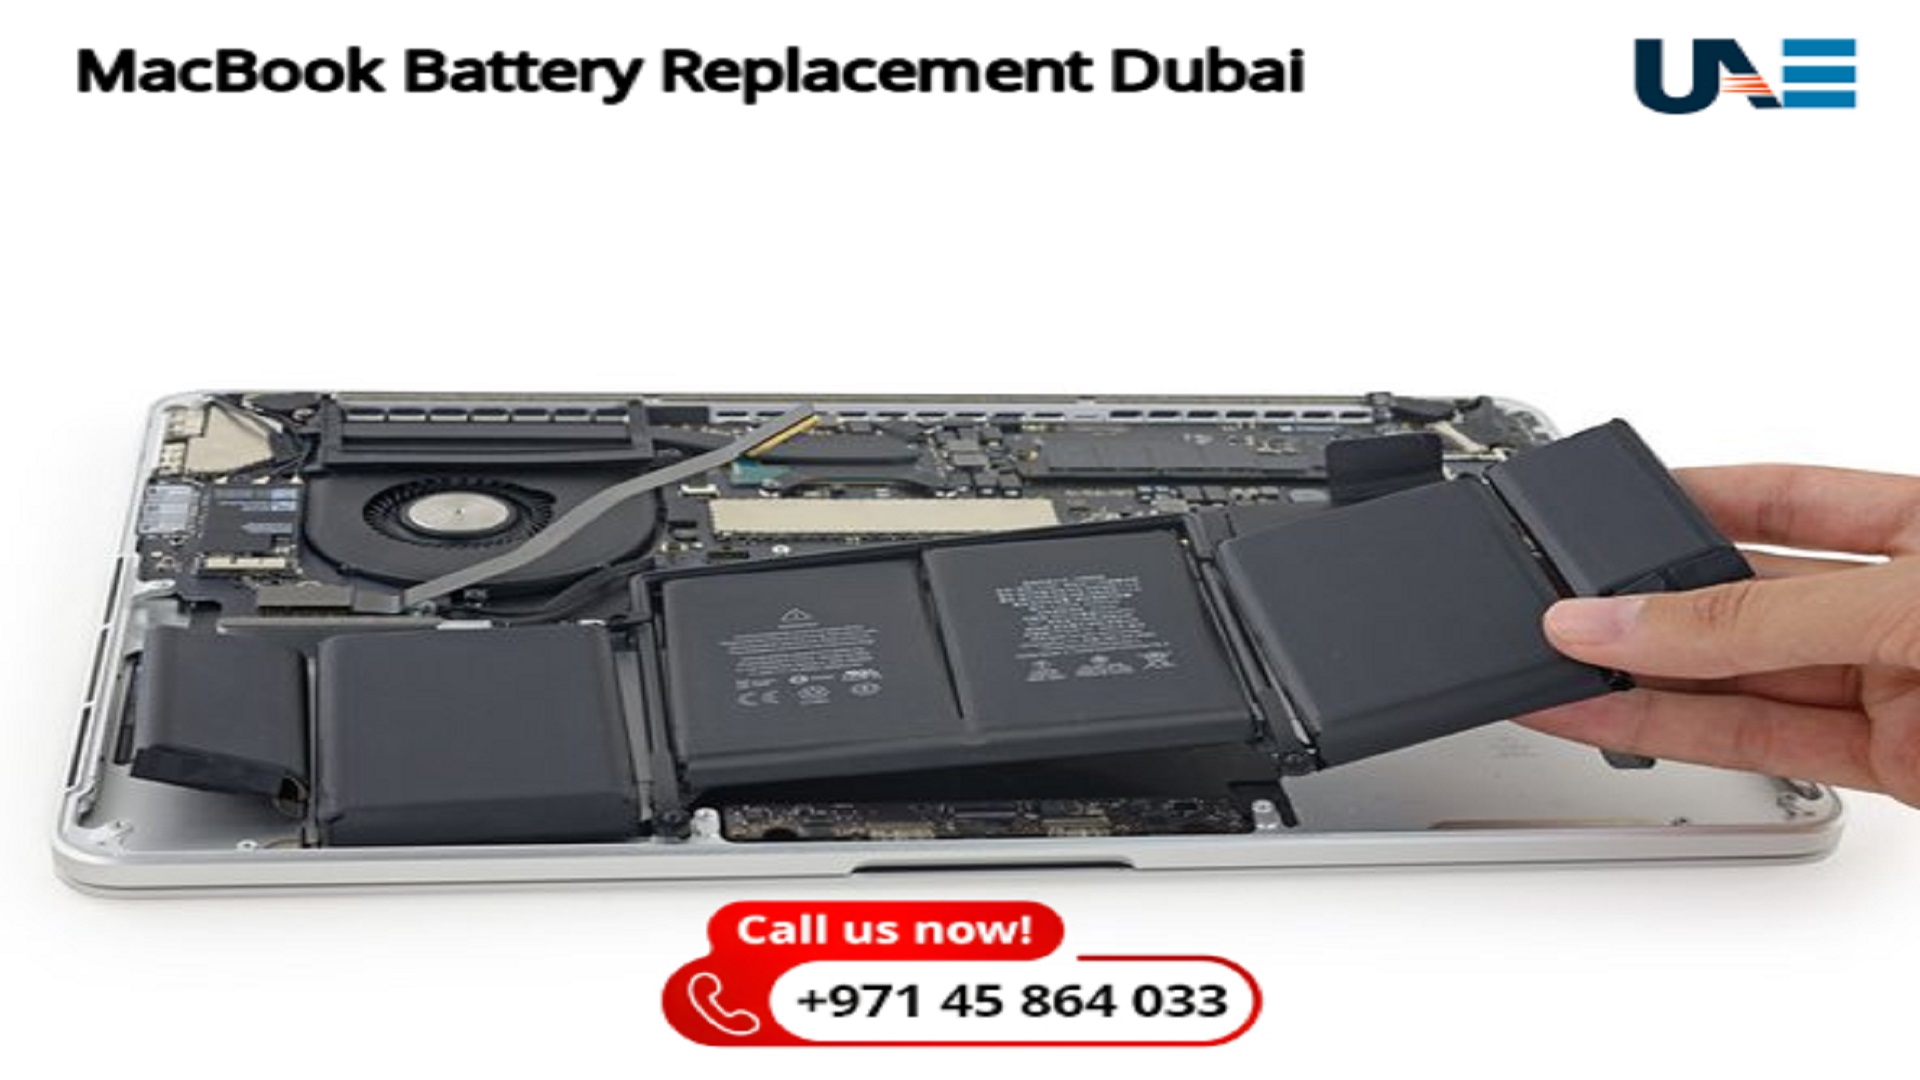 macbook battery replacement dubai